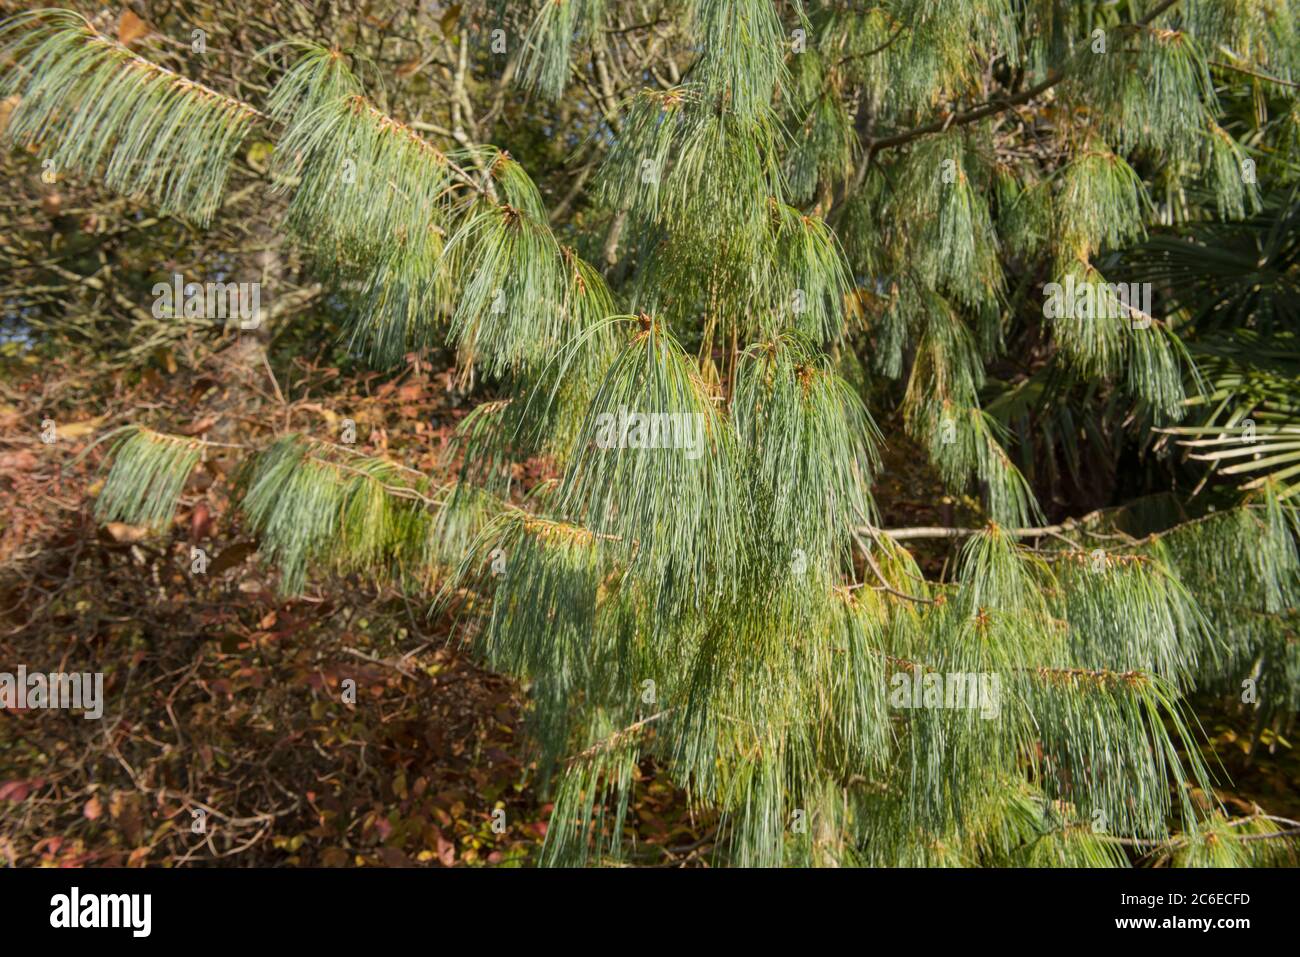 Feuillage vert d'un pin blanc Evergreen du Bhoutan (Pinus bhutanica) en pleine croissance dans un jardin du Devon rural, Angleterre, Royaume-Uni Banque D'Images